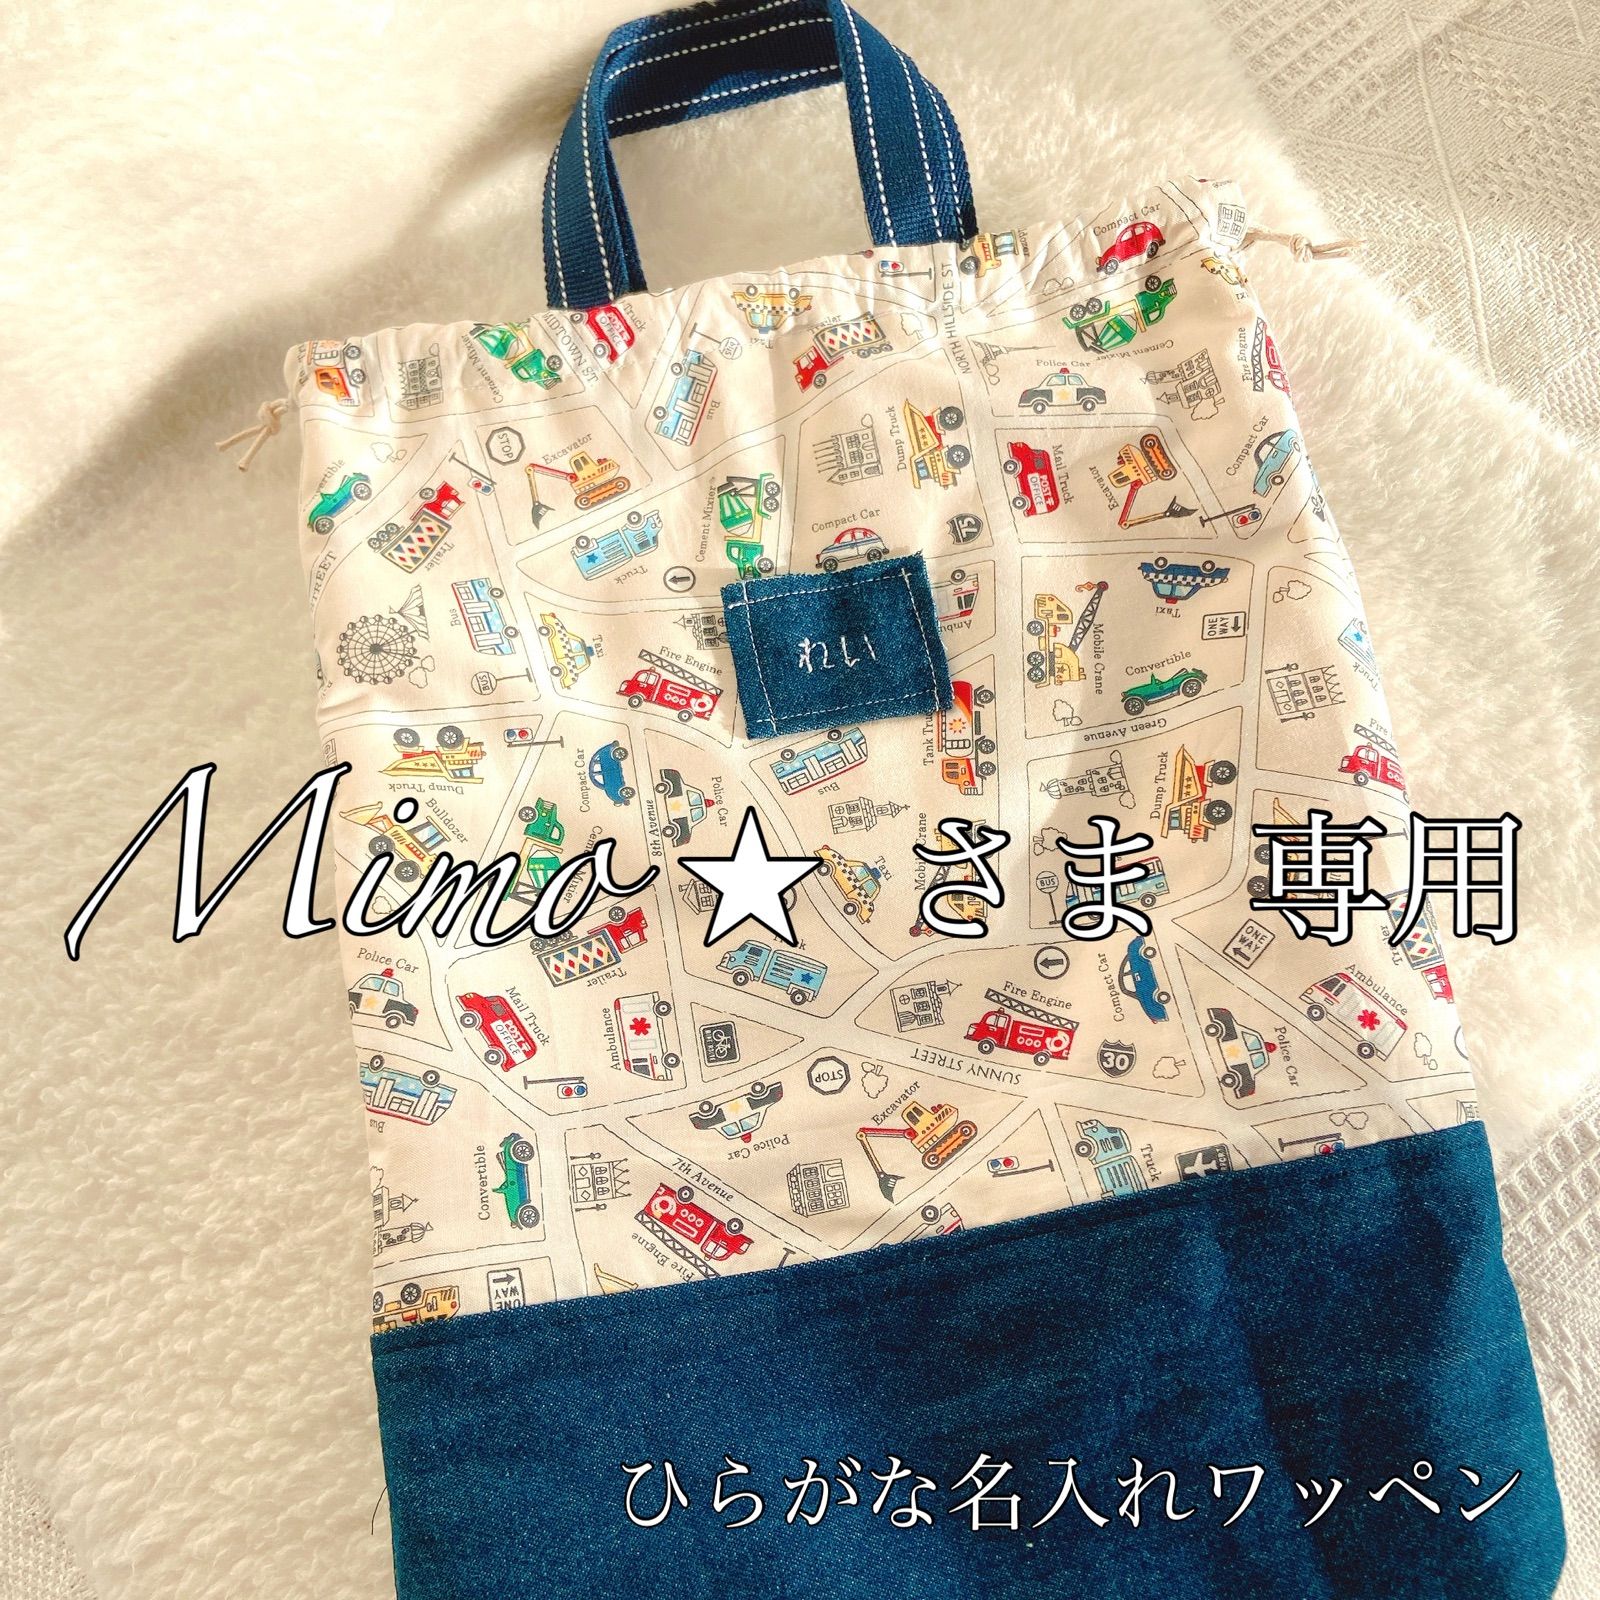 Mimo さま 専用 - marimon made - メルカリ